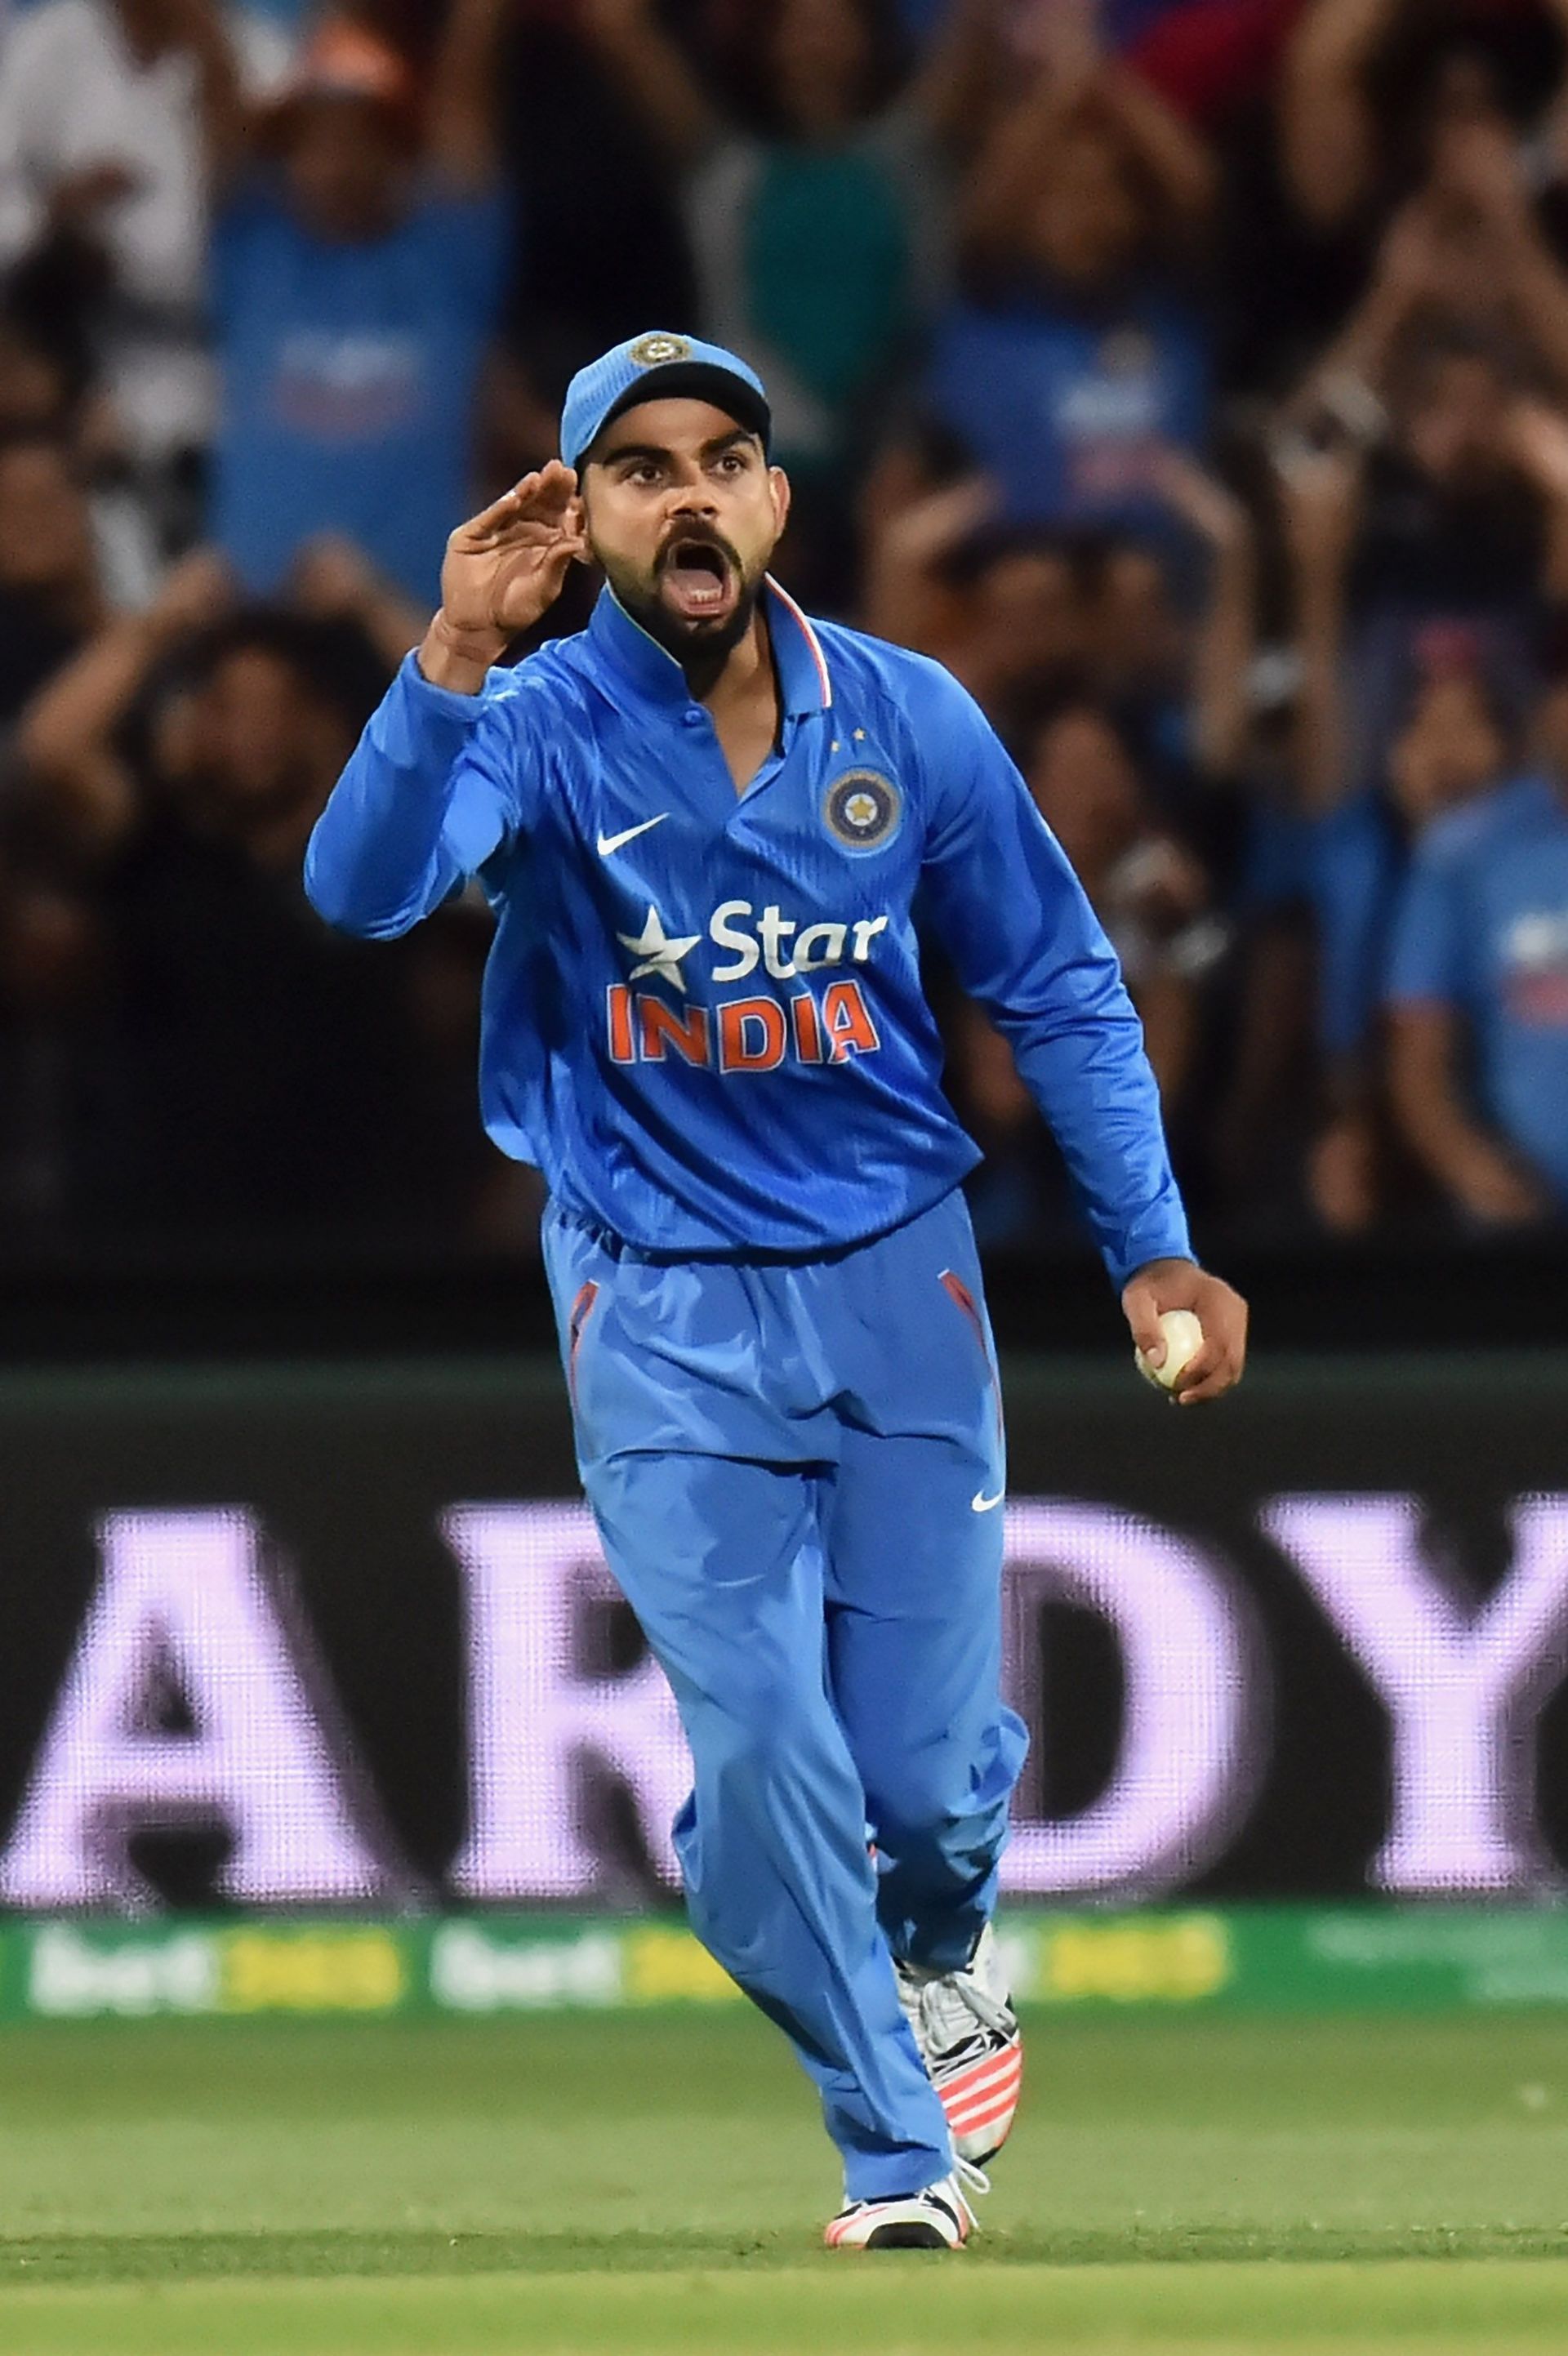 Virat Kohli during Australia v India - T20I Game 1 in Adelaide [Pic Credit: Getty Images]